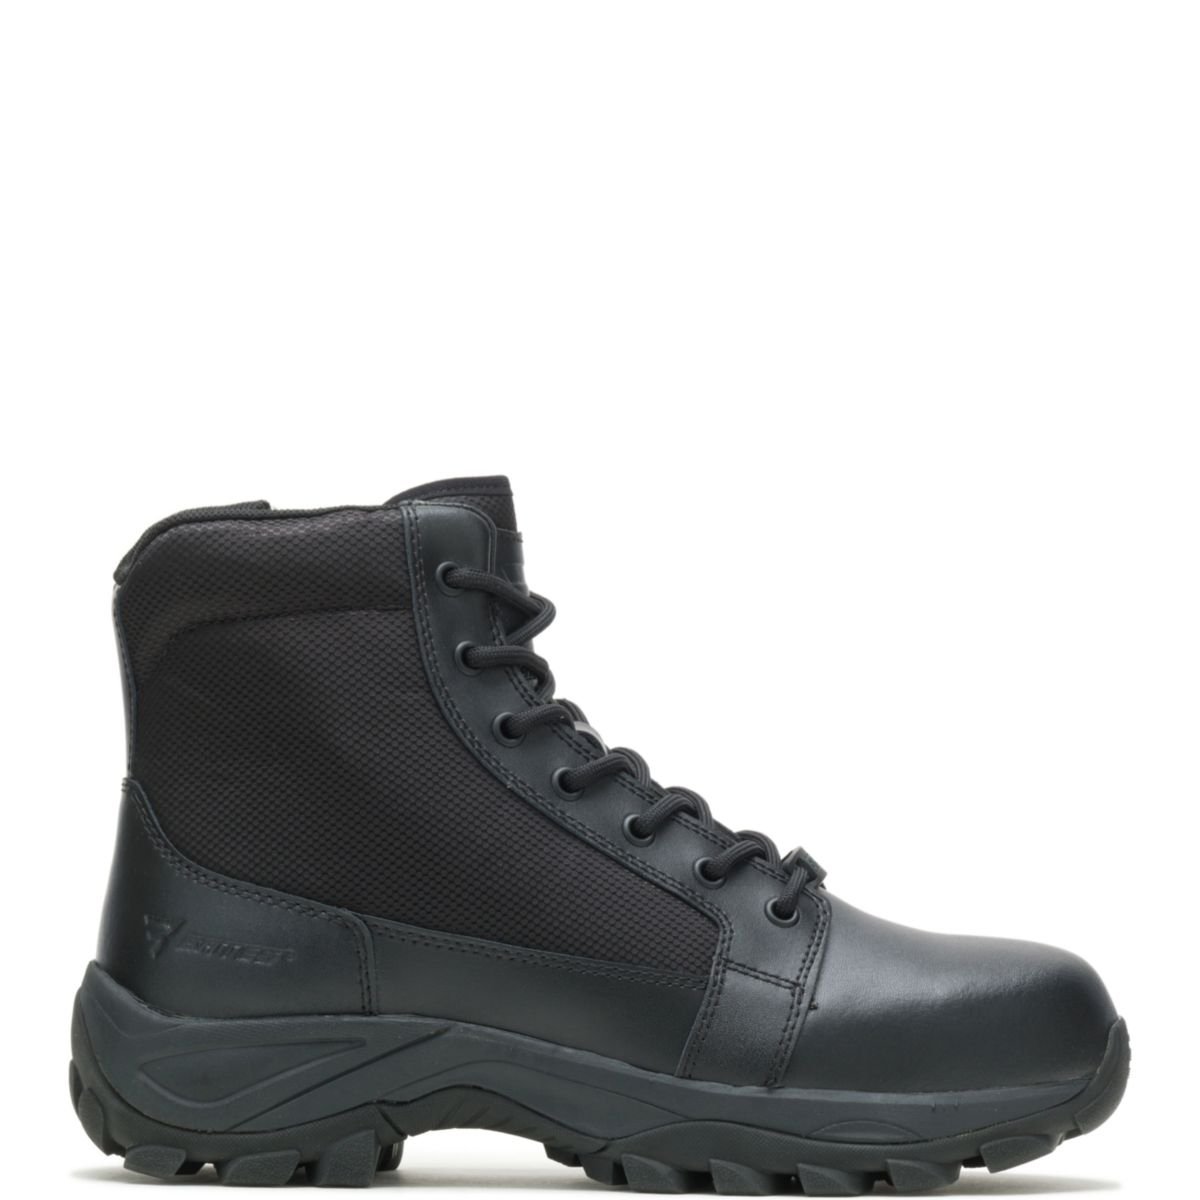 Bates Men's Fuse Zip 6-Inch Side Zip Steel Toe Work Boot Black - E06505 BLACK - BLACK, 8